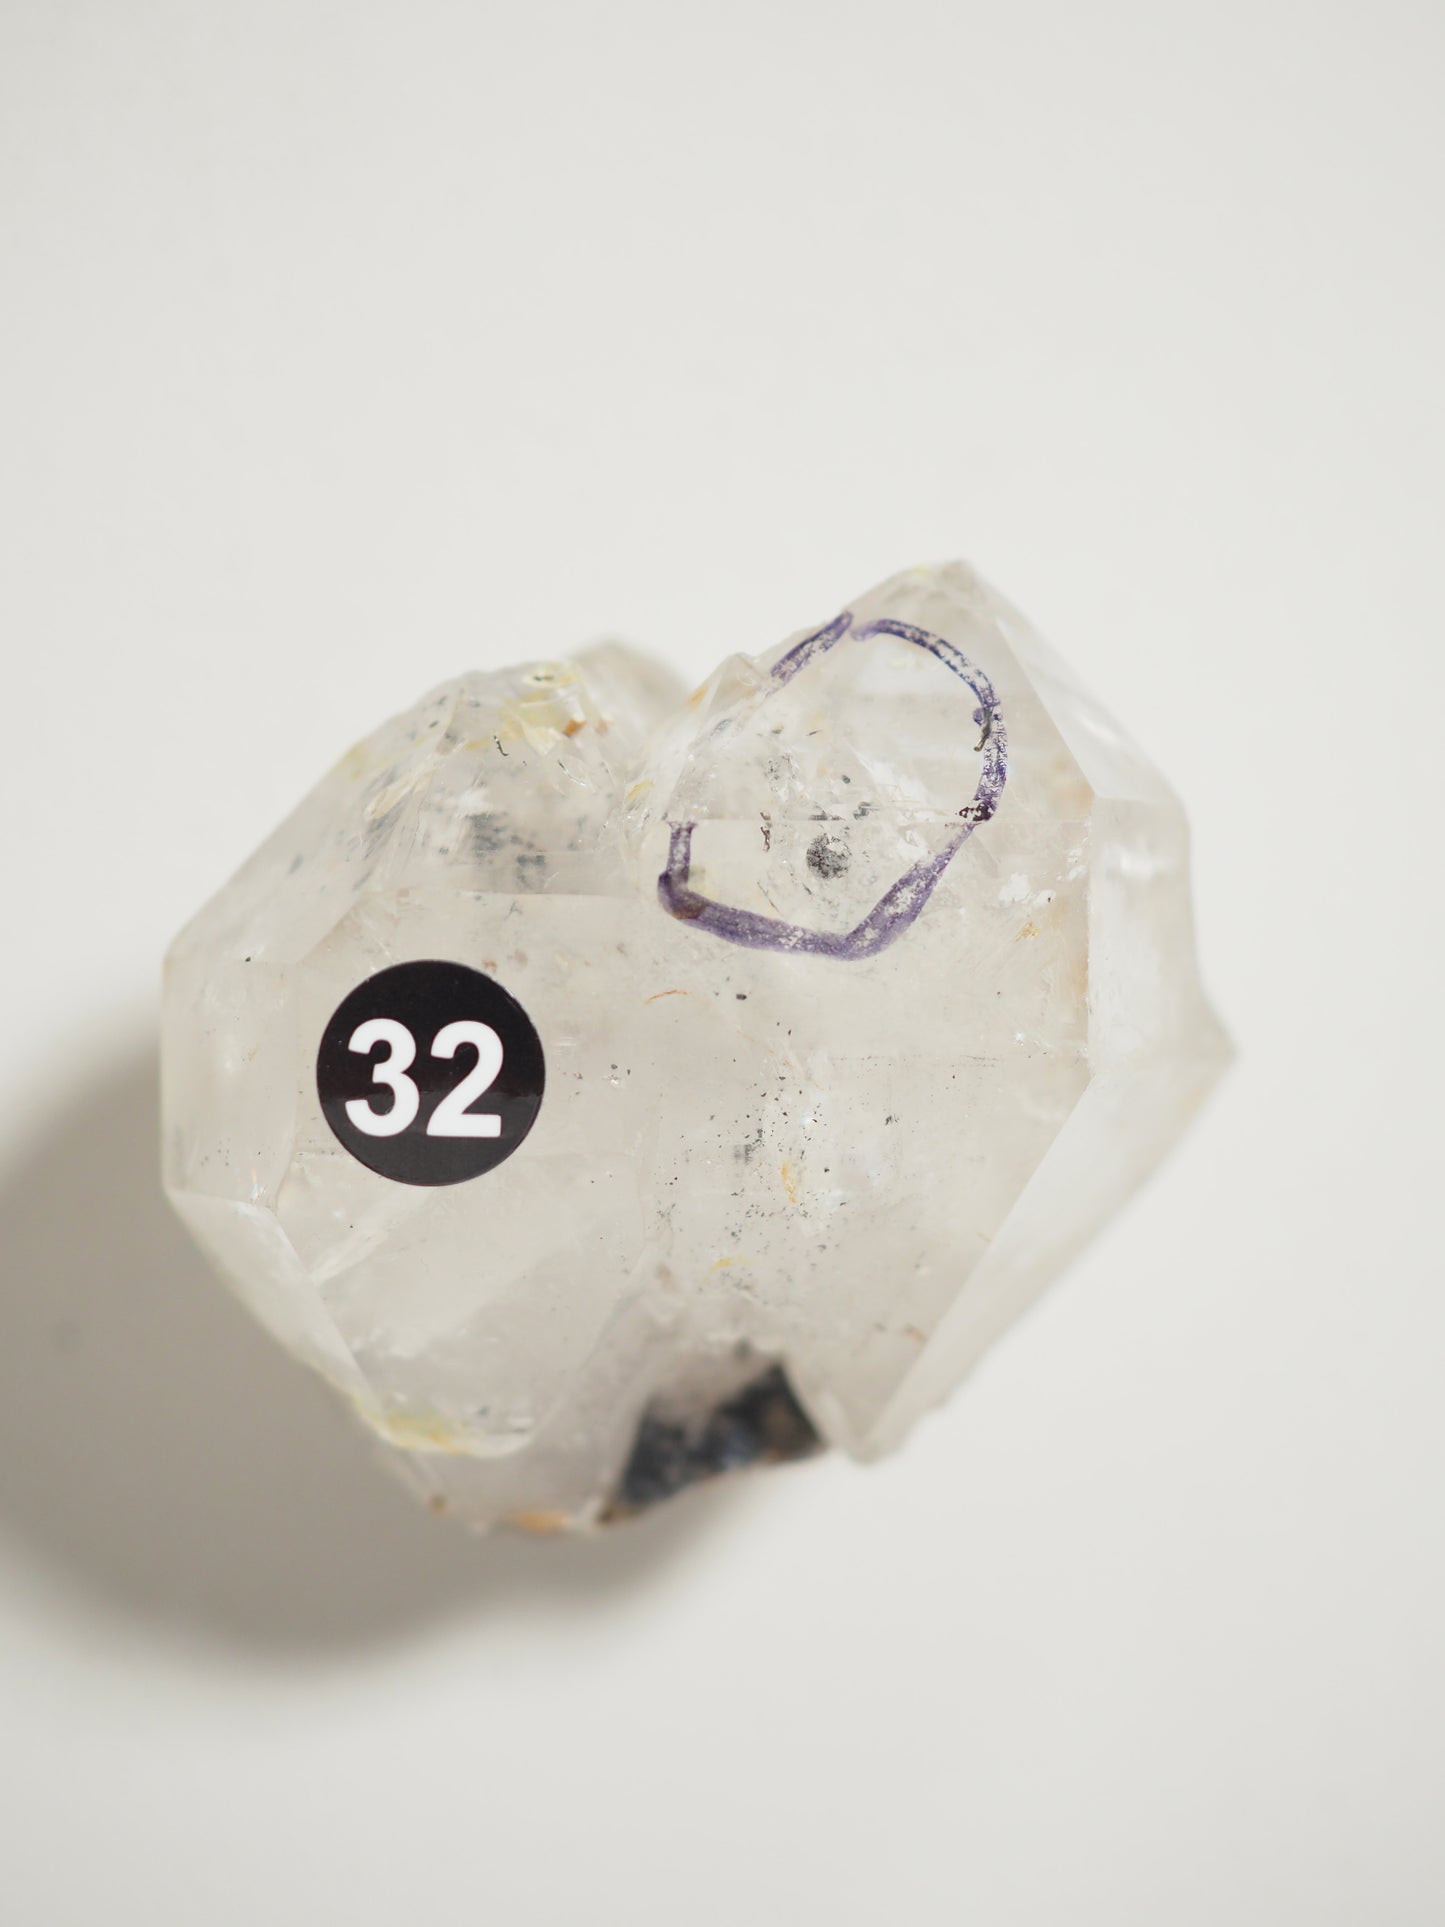 ENHYDRO Bergkristall mit Wassereinschluss & 1 Bubble . Enhydro Clearquartz [32] ca. 6cm - aus Guishou Province China